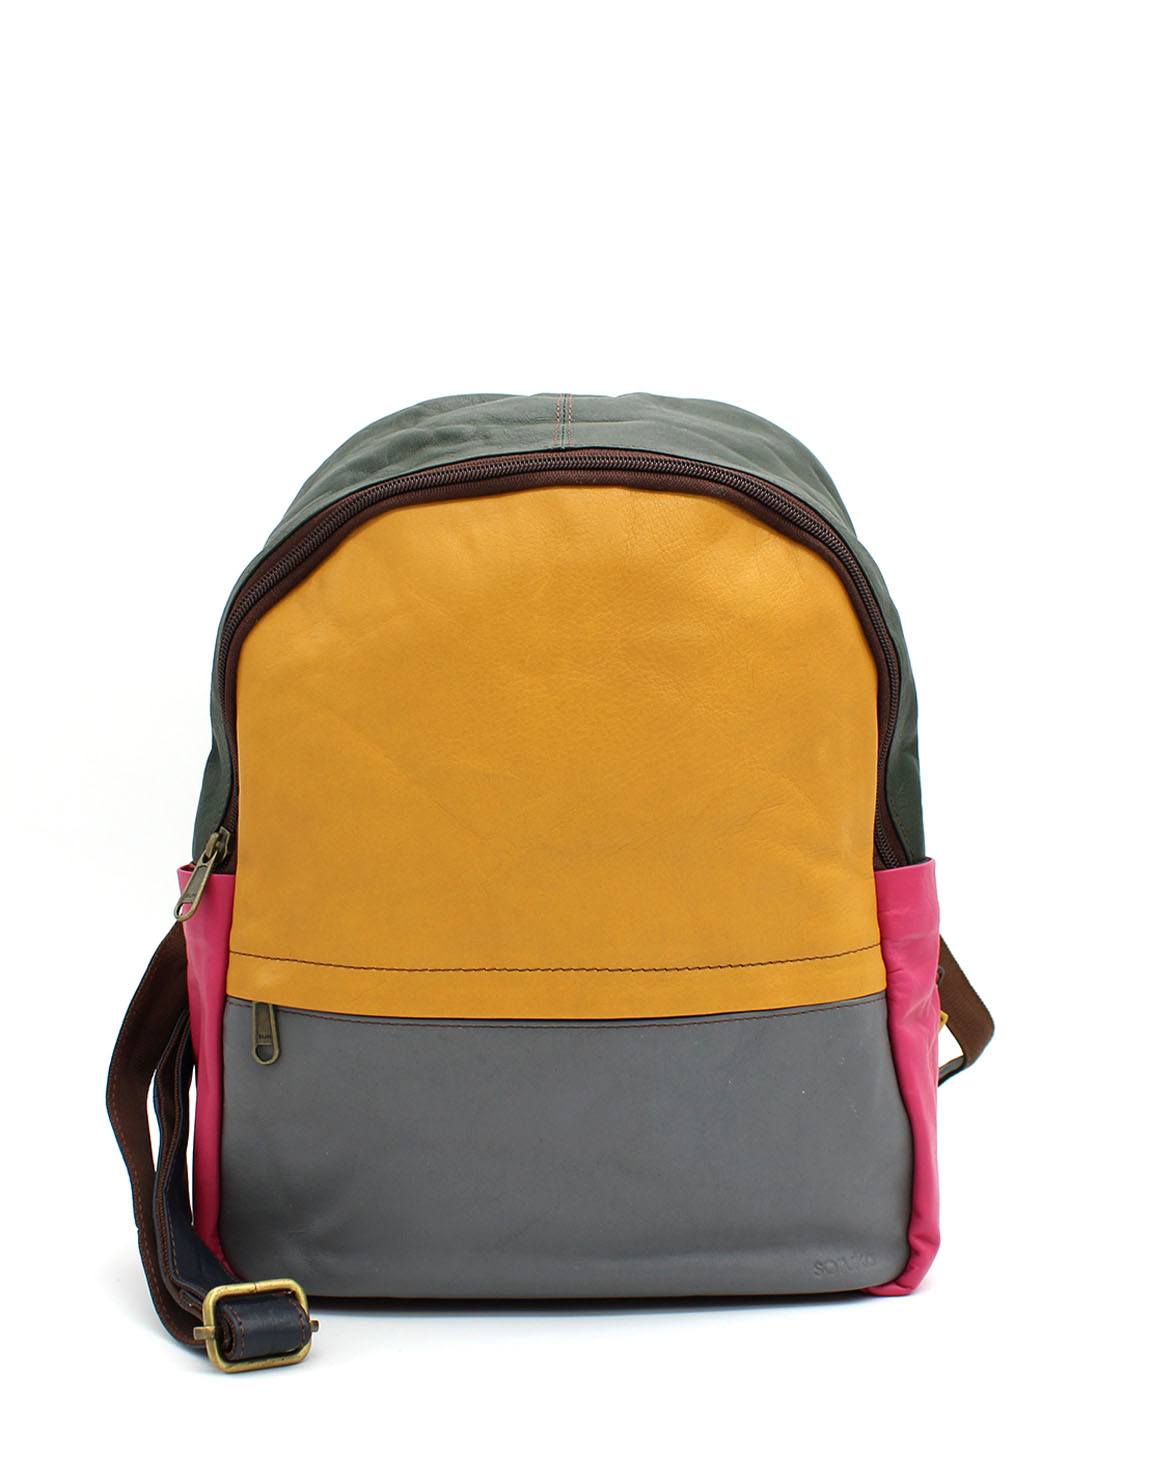 Lexi - Recycled Backpacks for women | Soruka US